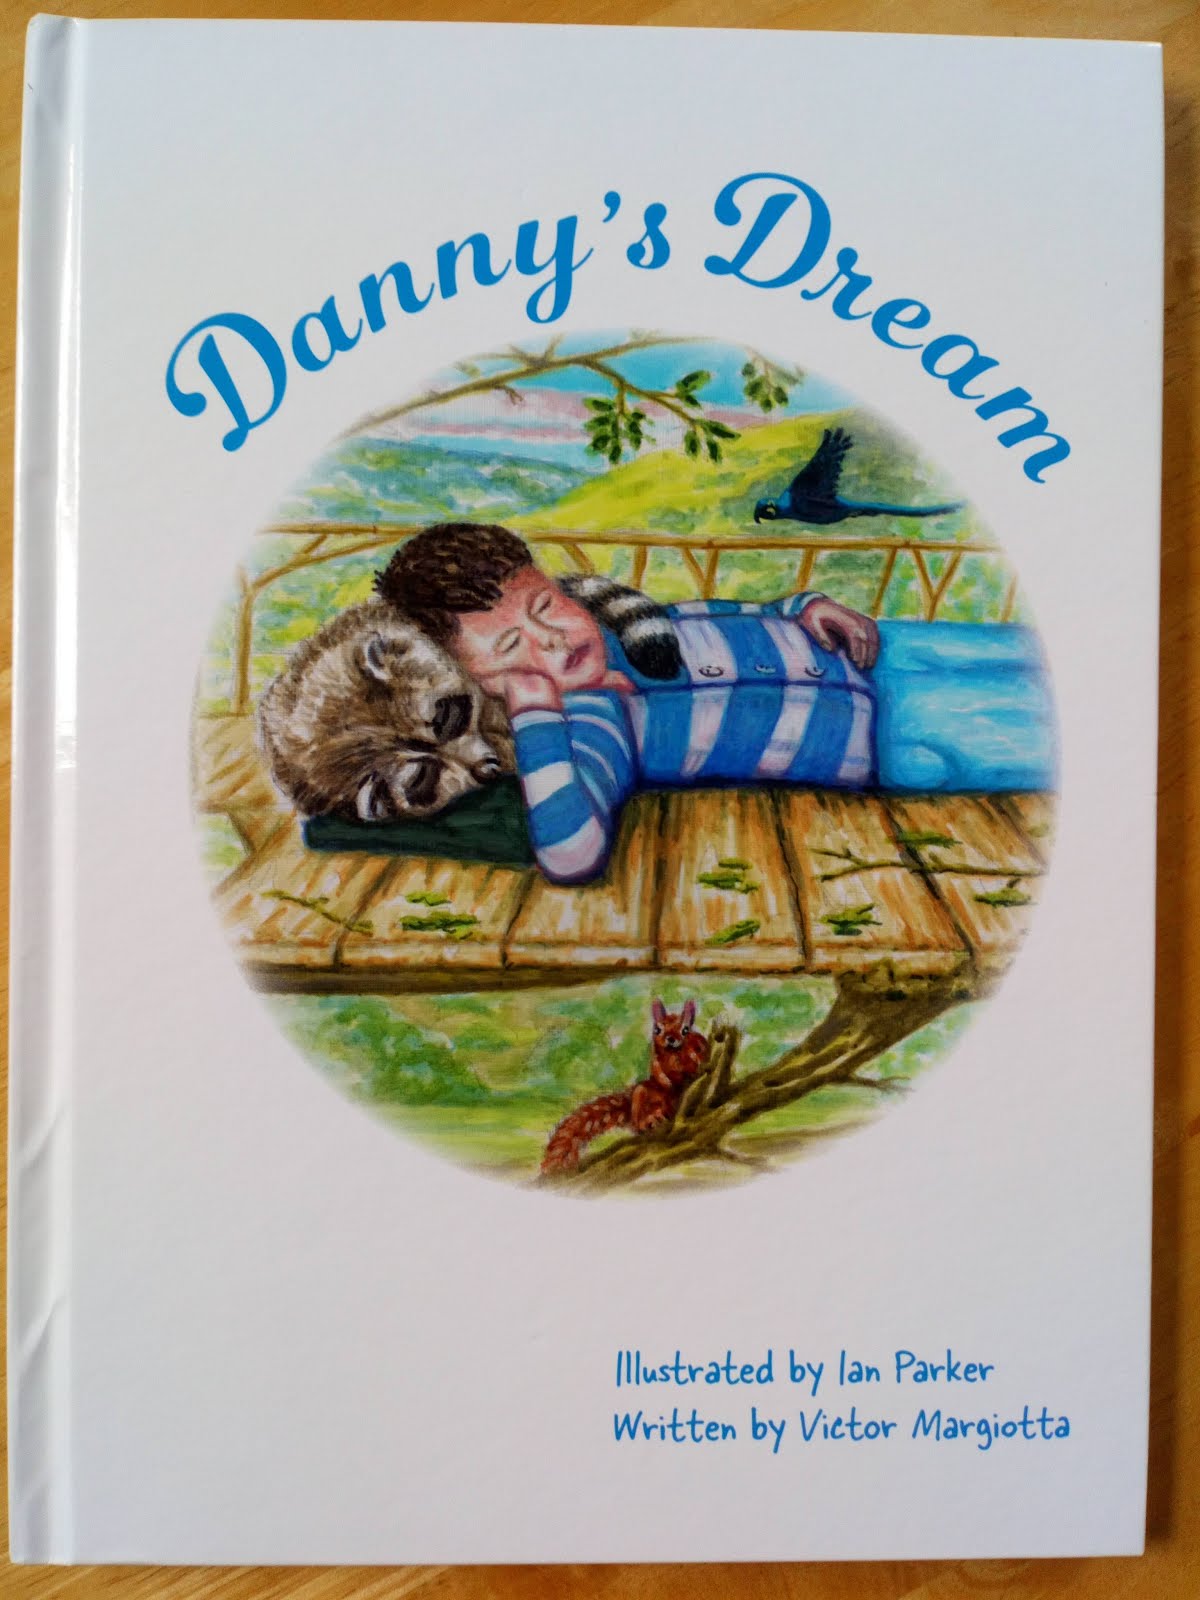 Dream com danny What? Danny